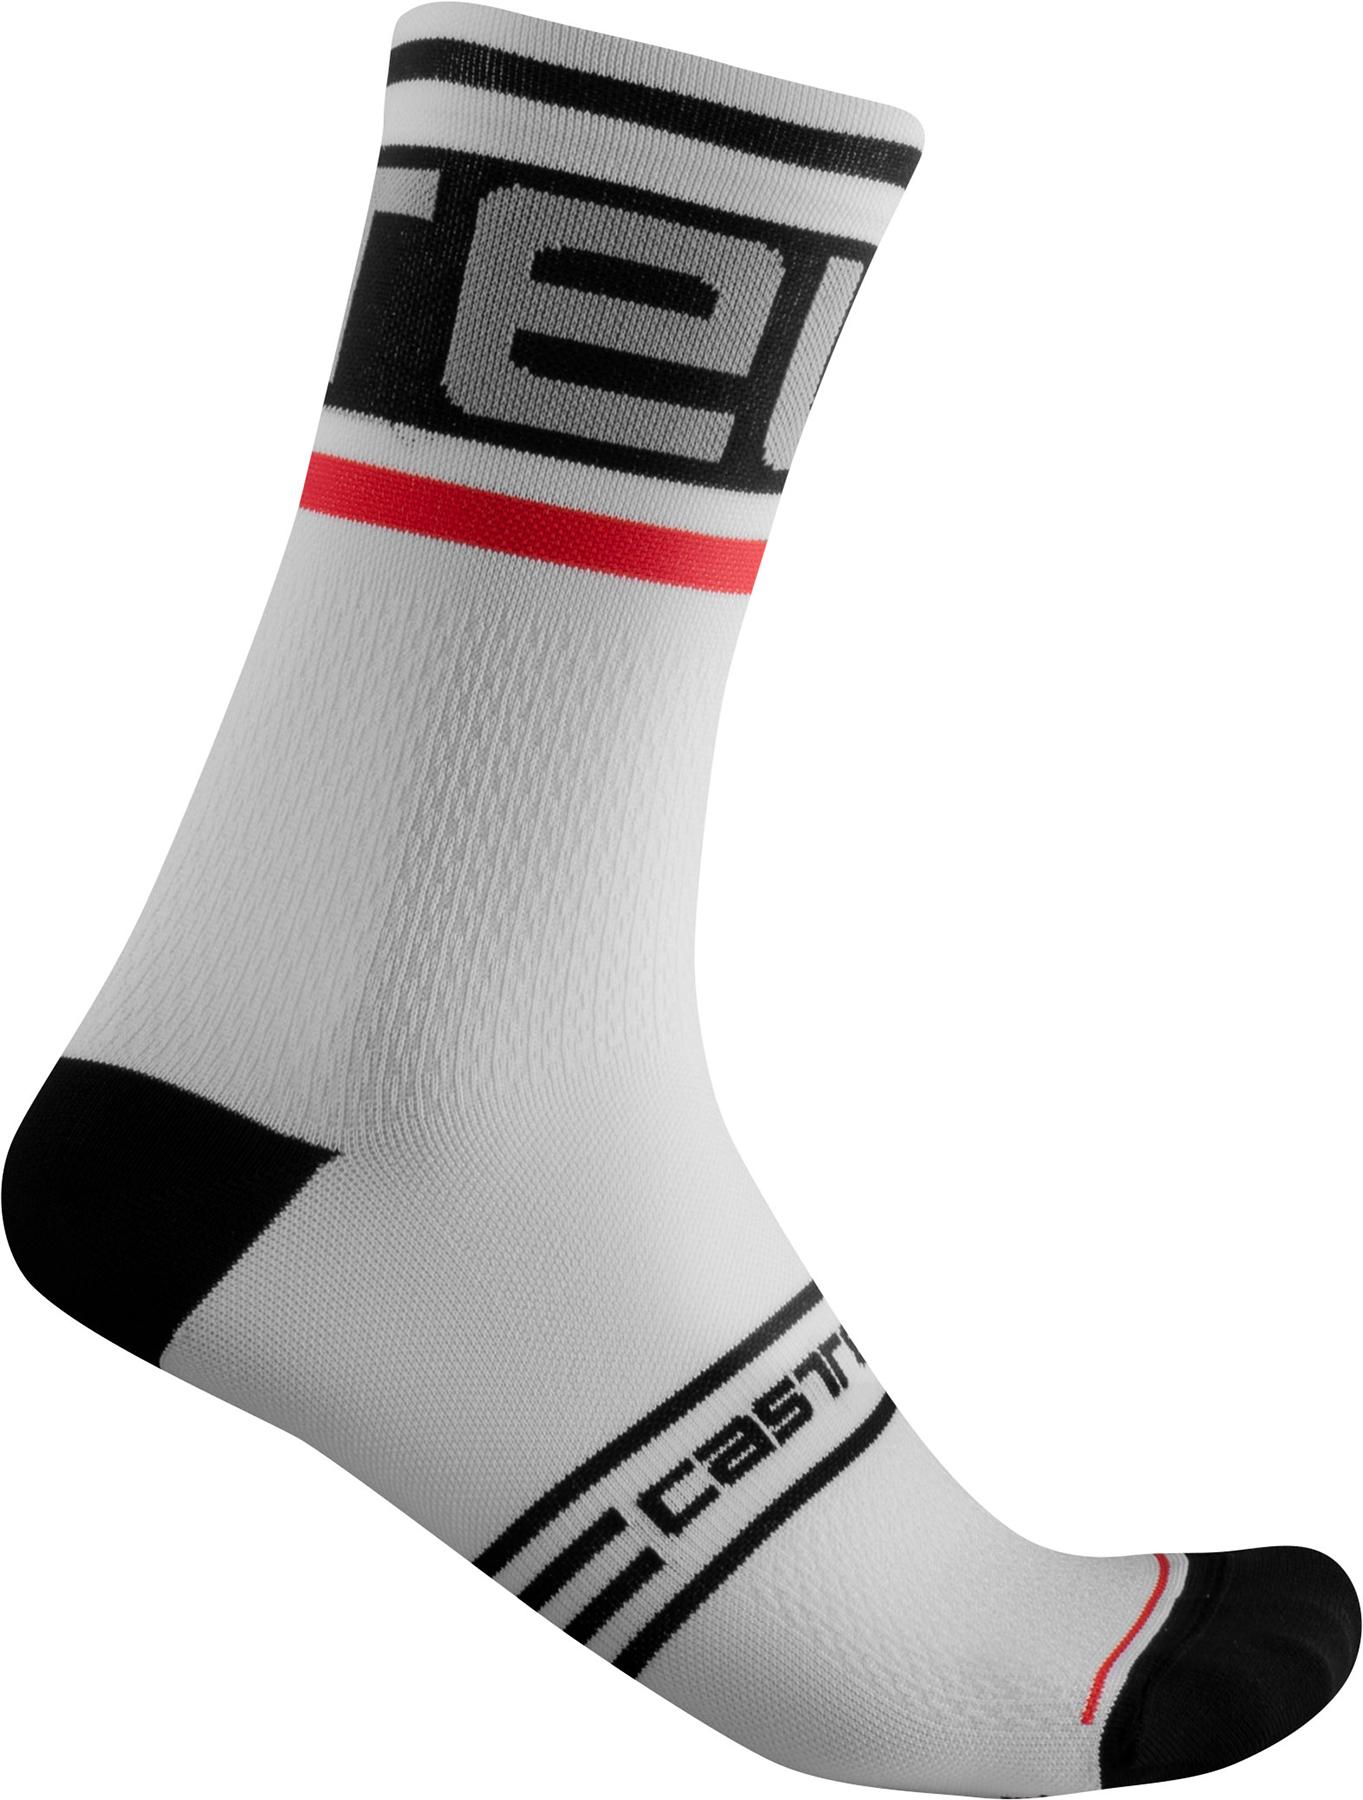 Castelli Prologo 15 Cycling Socks - Black/white